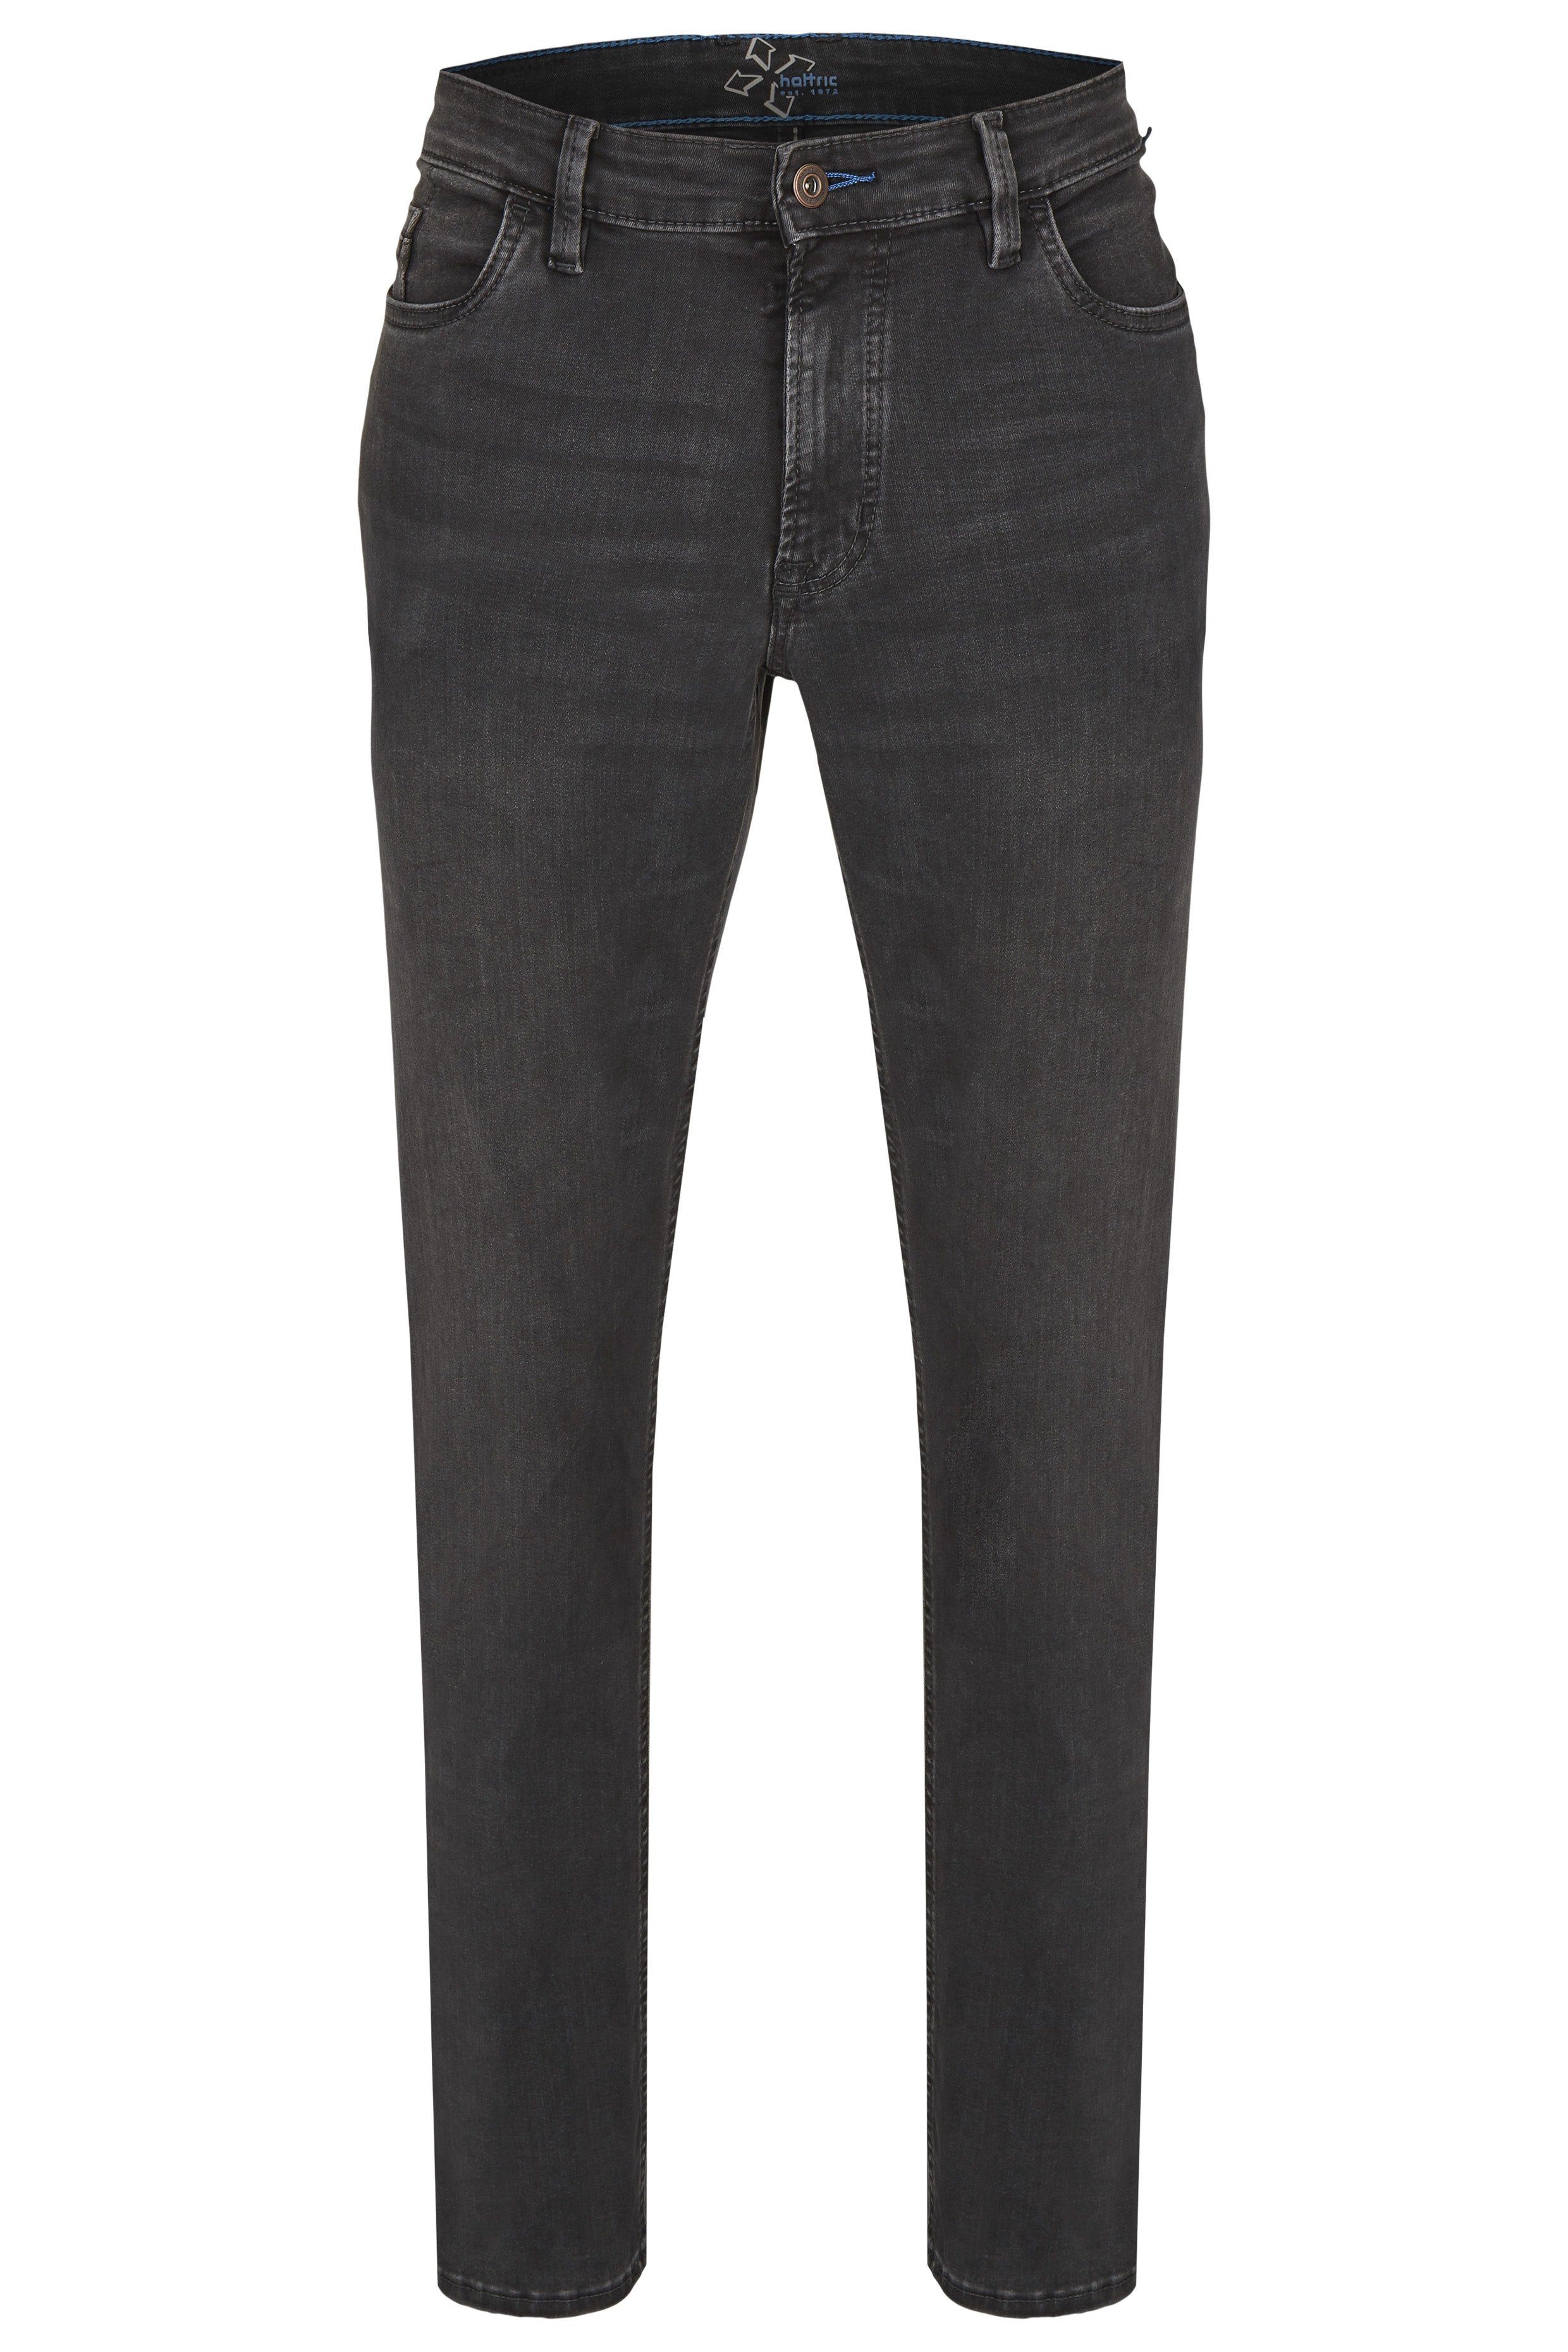 Hattric 5-Pocket-Jeans HATTRIC HUNTER dark grey washed out 688985 9Y51.07 anthra